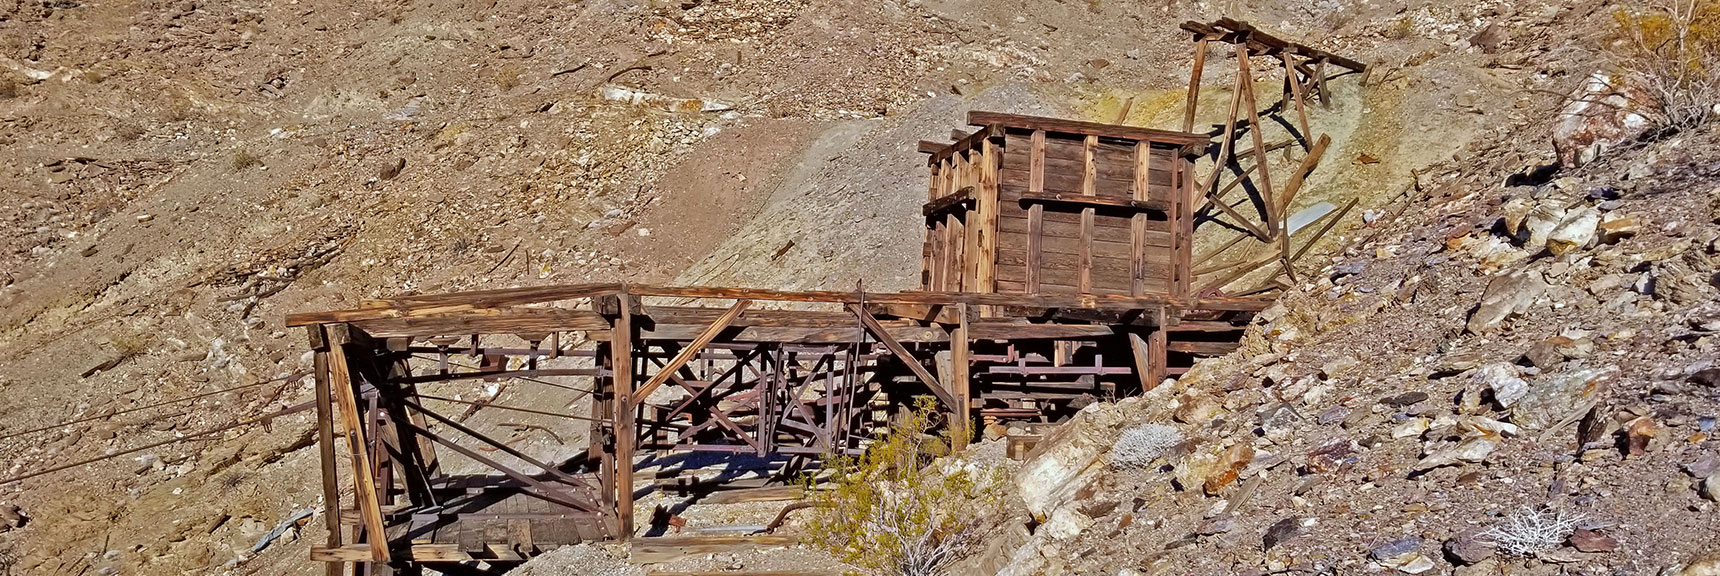 Upper Stamp Mill and Aerial Tram Summit | Keane Wonder Mine | Death Valley National Park, California